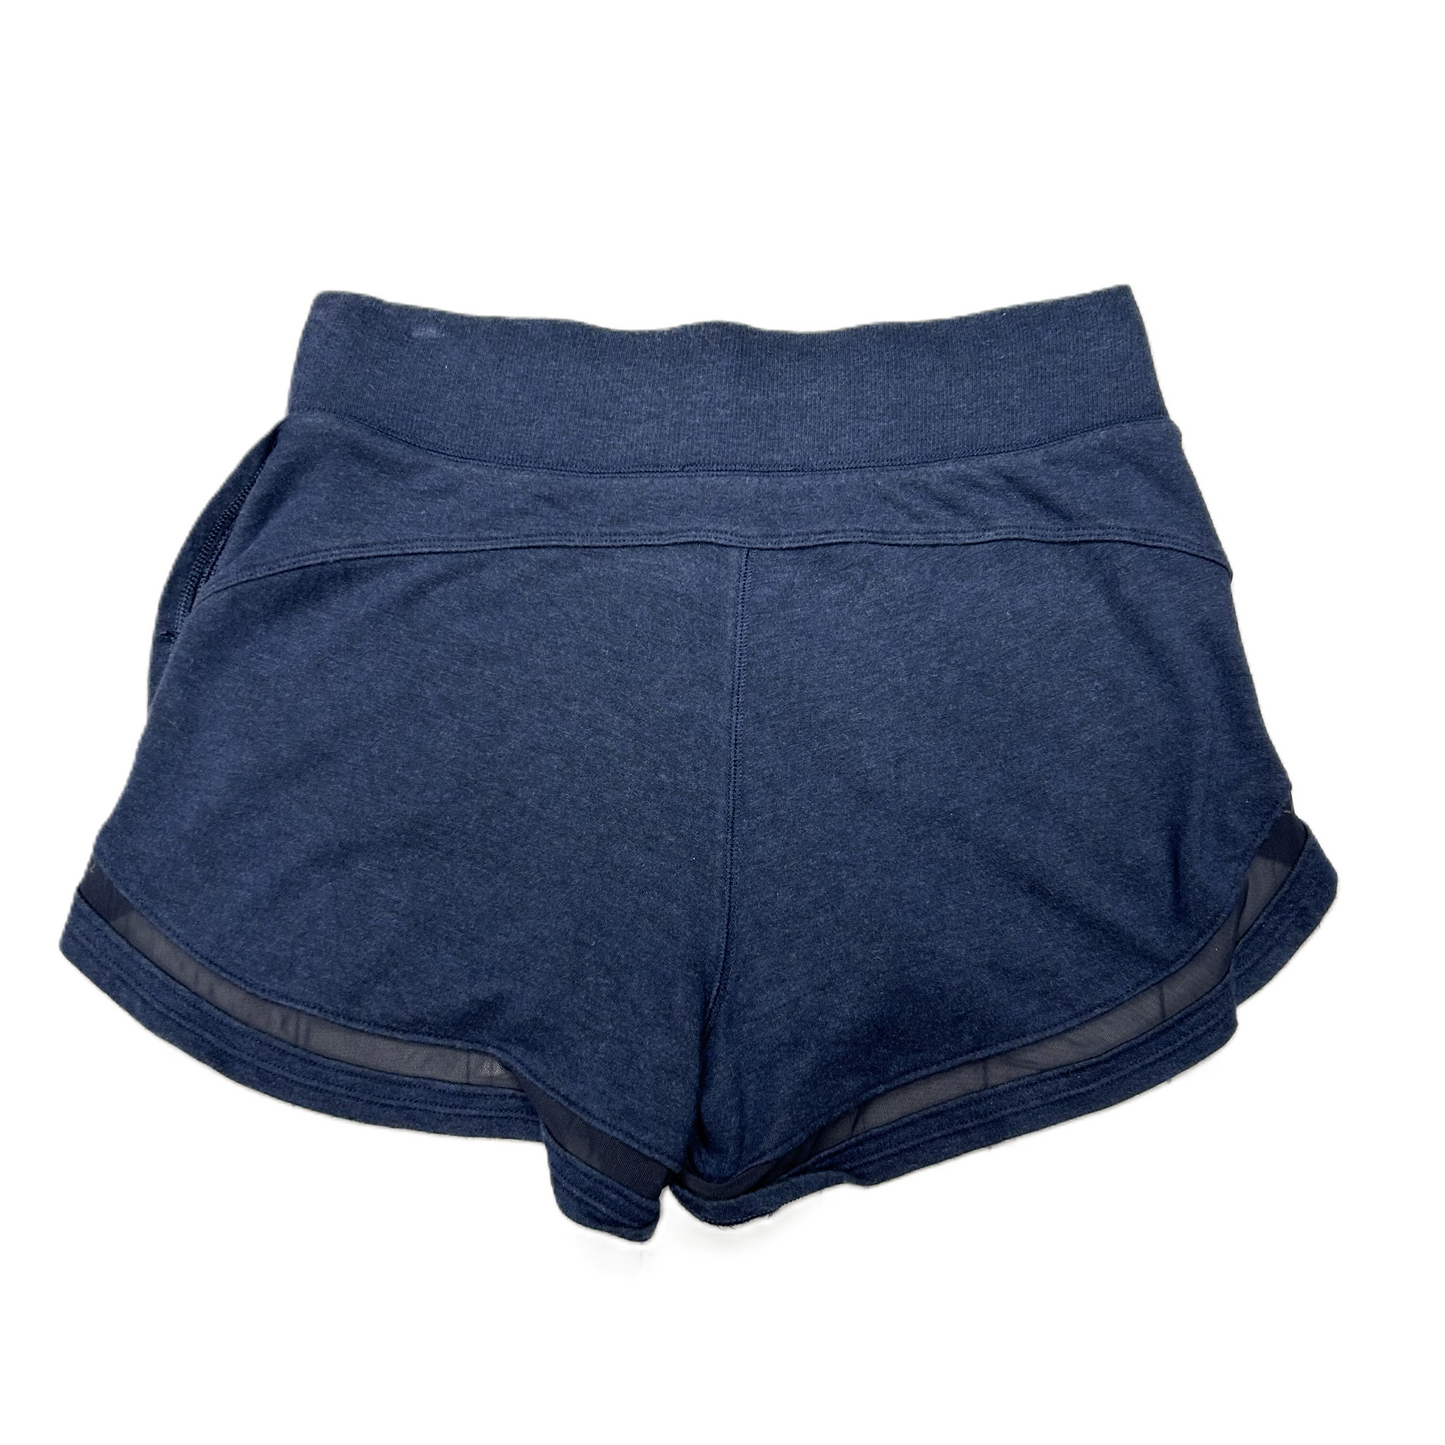 Blue Shorts By Athleta, Size: S